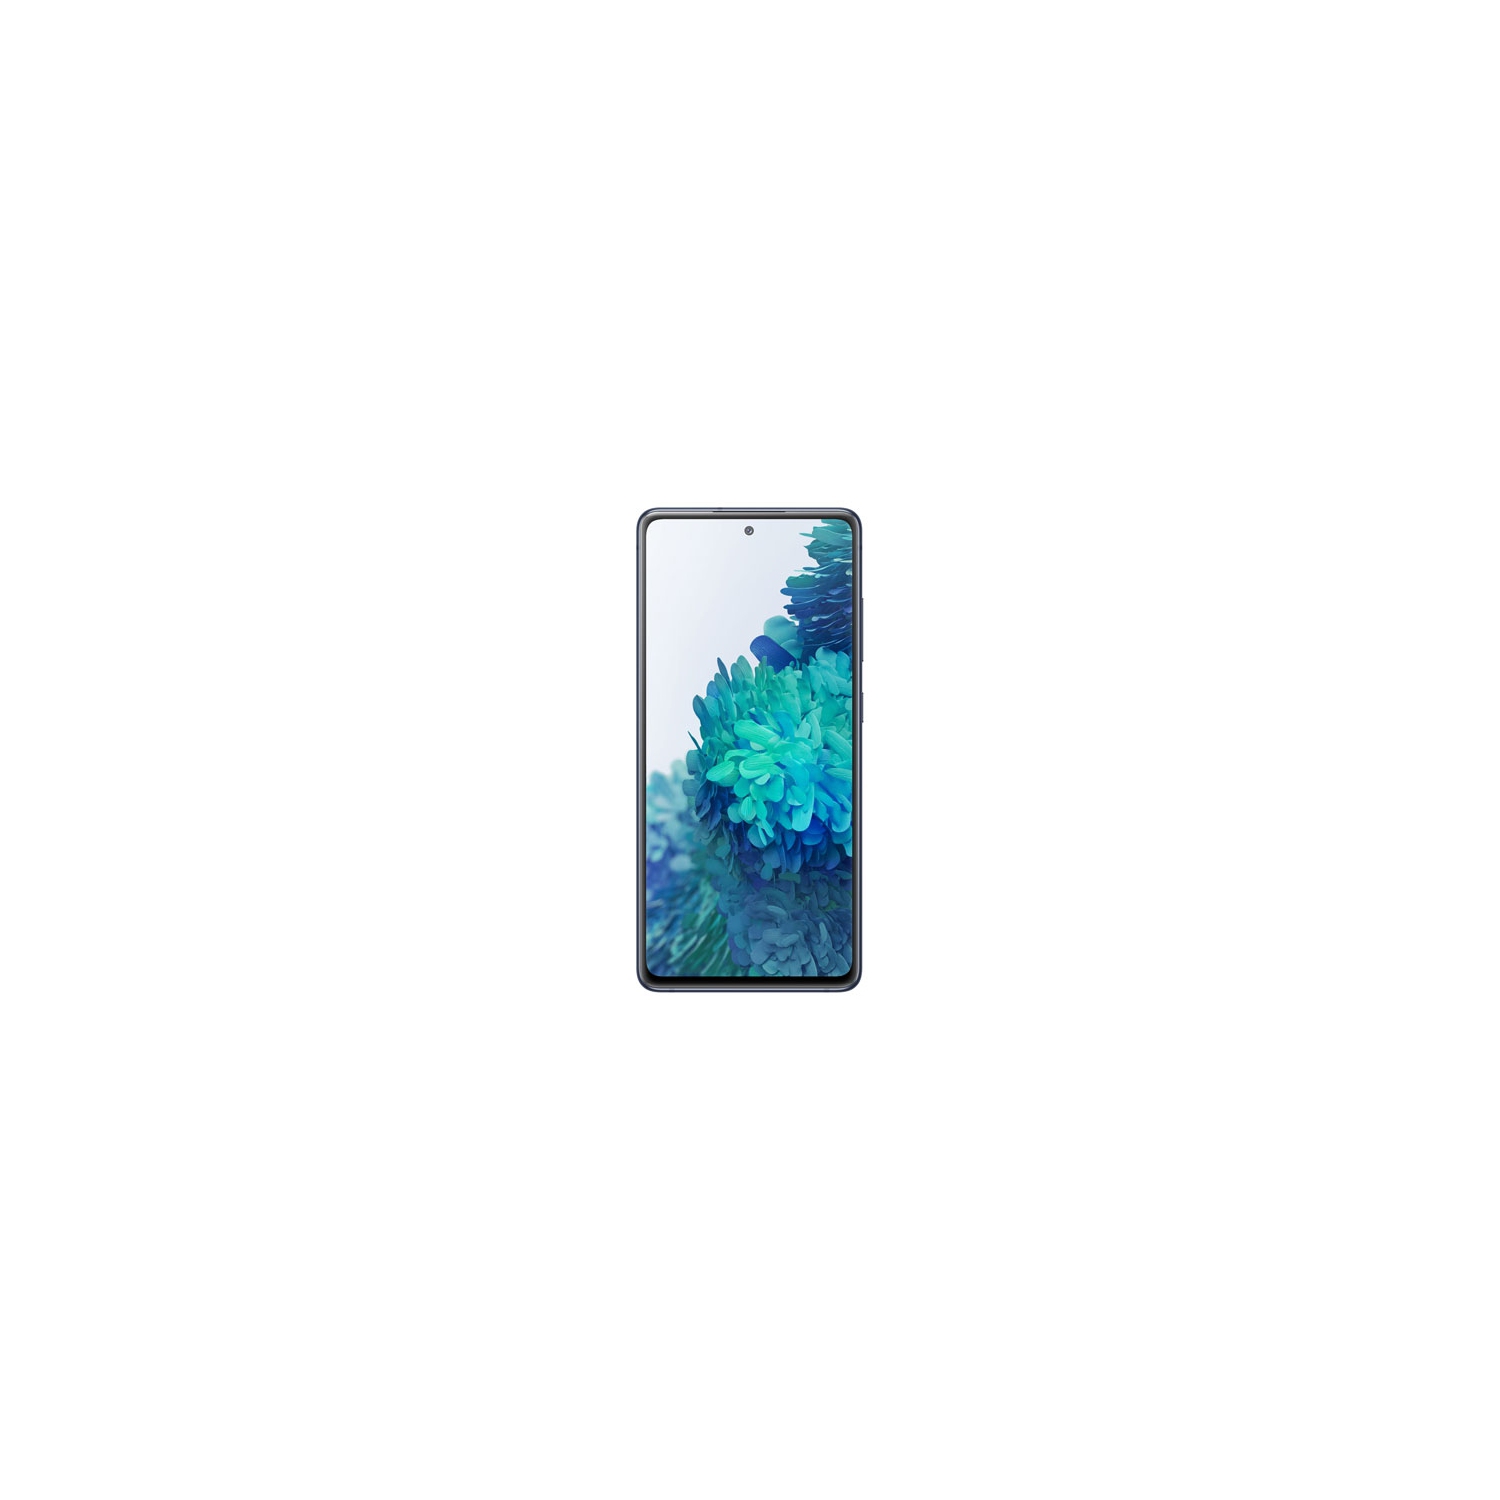 Open Box - Samsung Galaxy S20 FE 5G 128GB Smartphone - Cloud Navy - Canadian Model -Unlocked